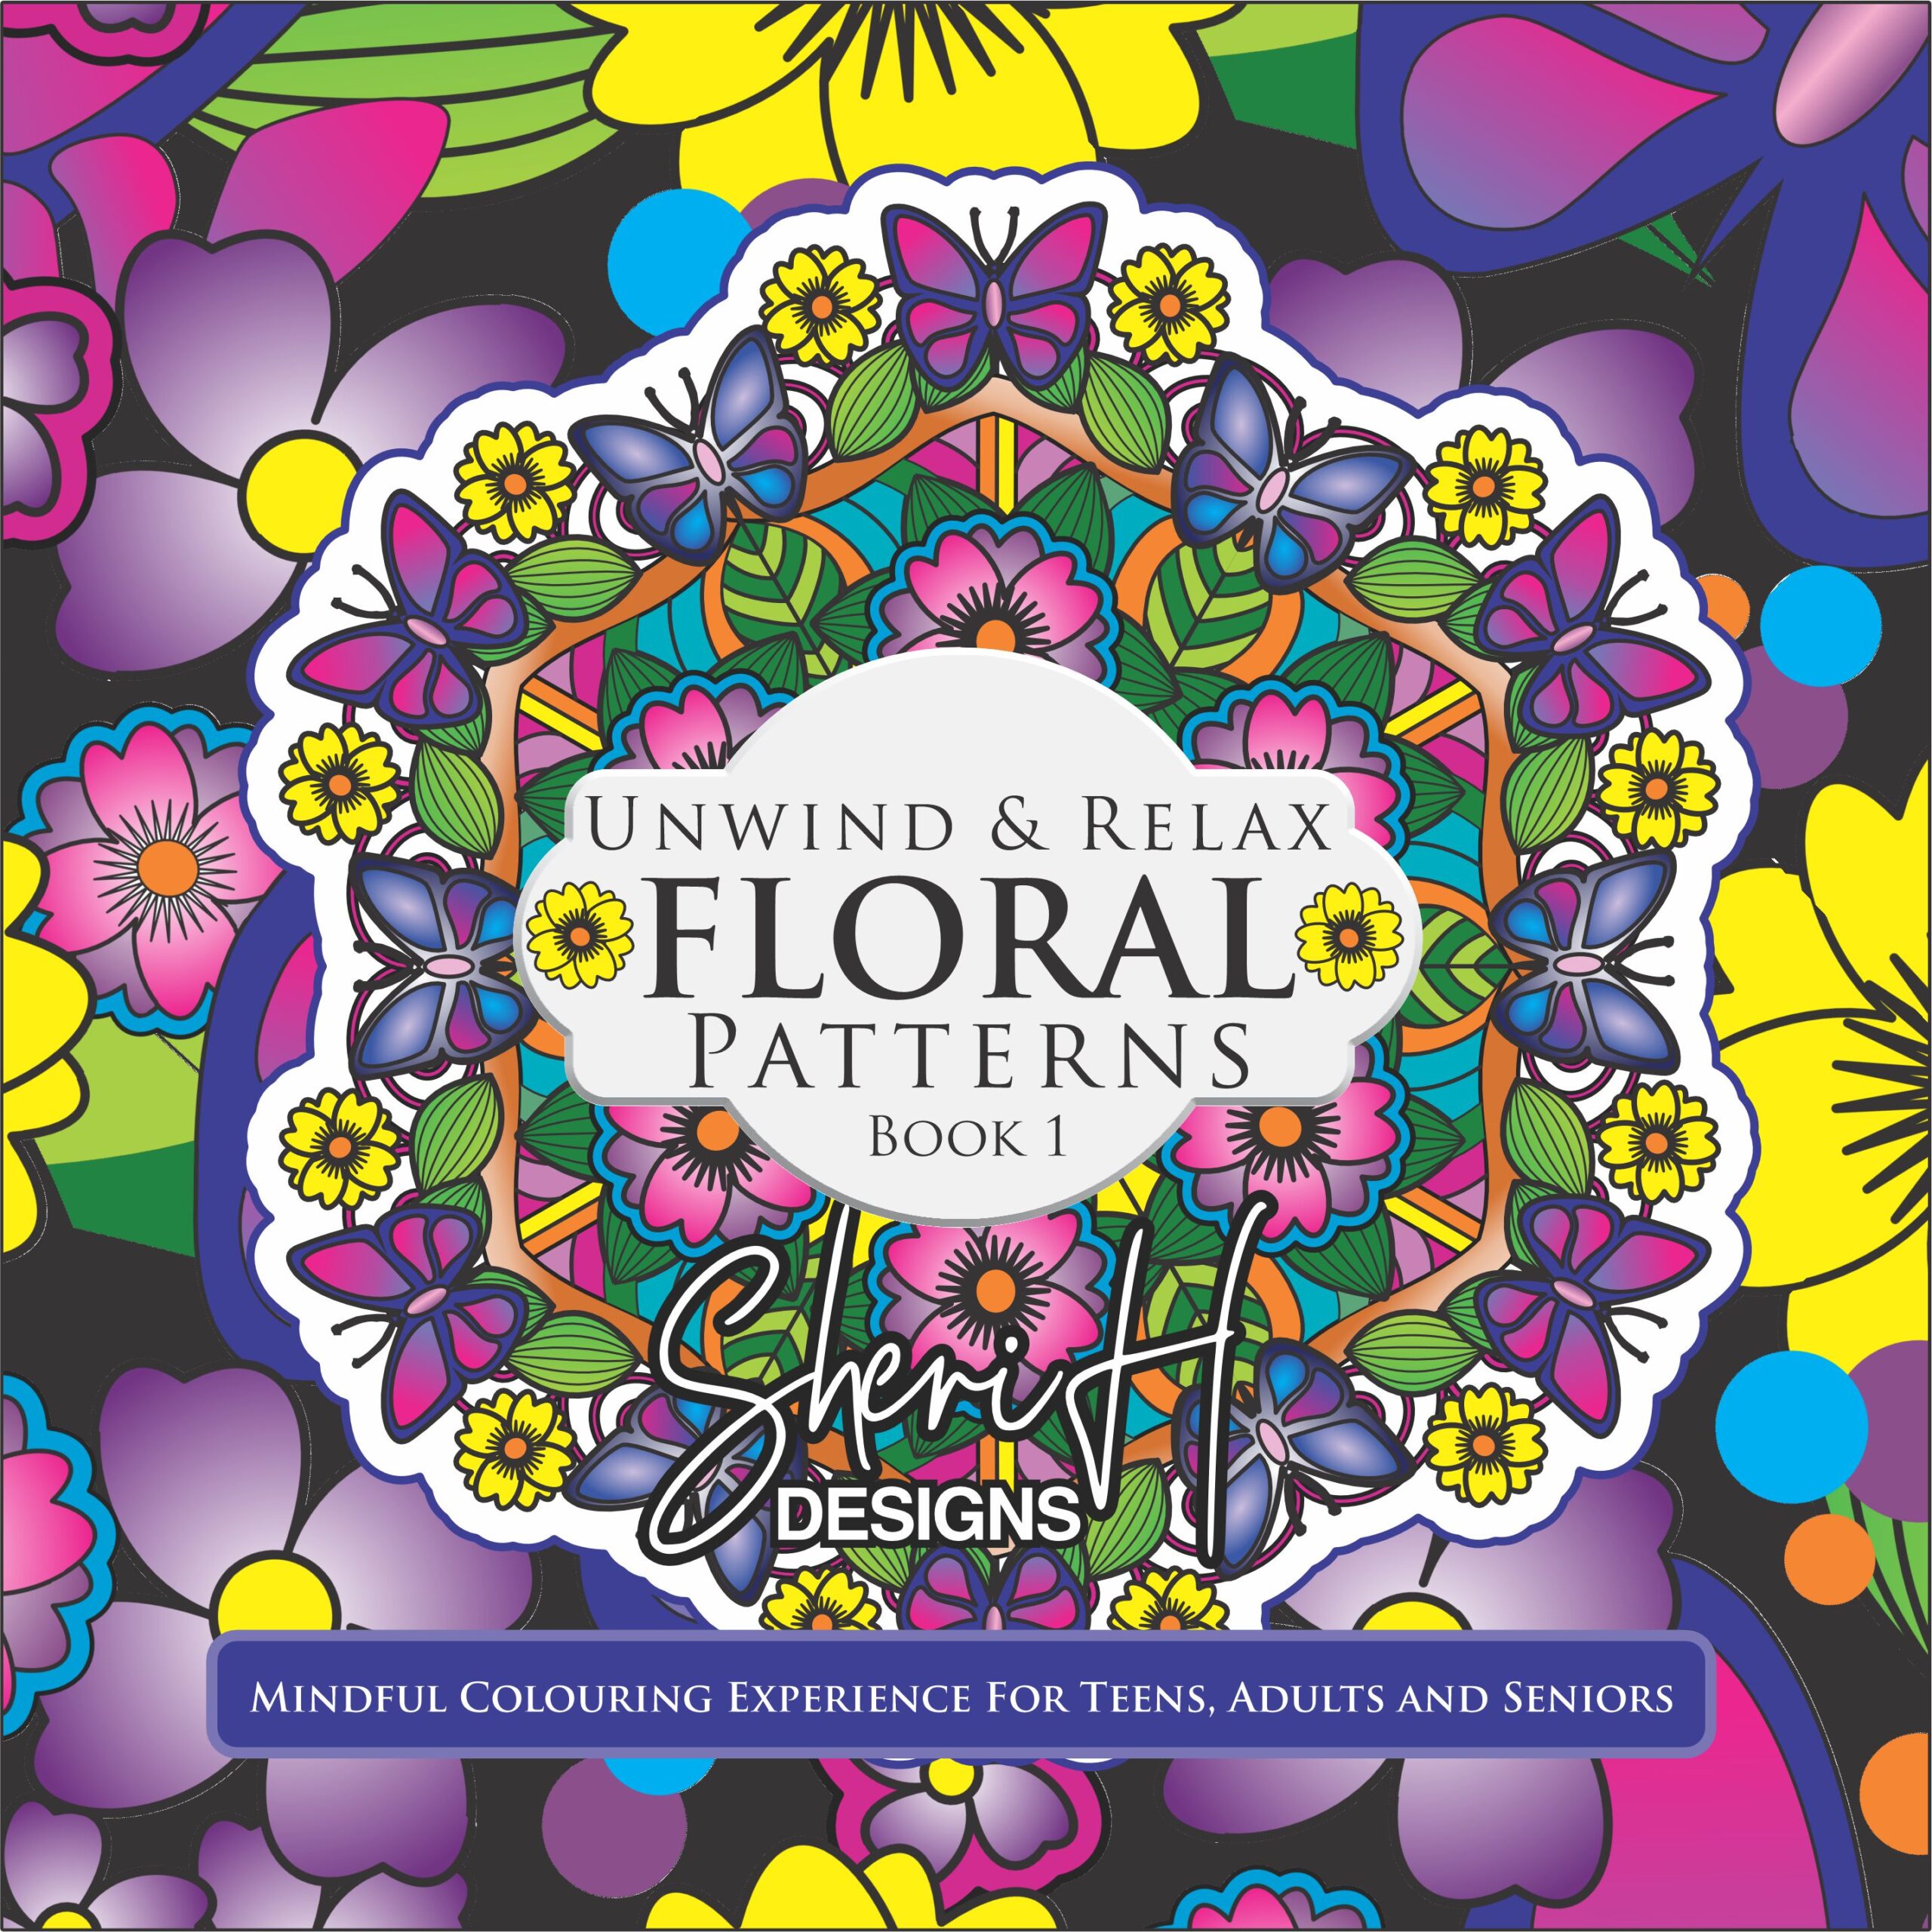 floral Mandalas coloring book on Amazon